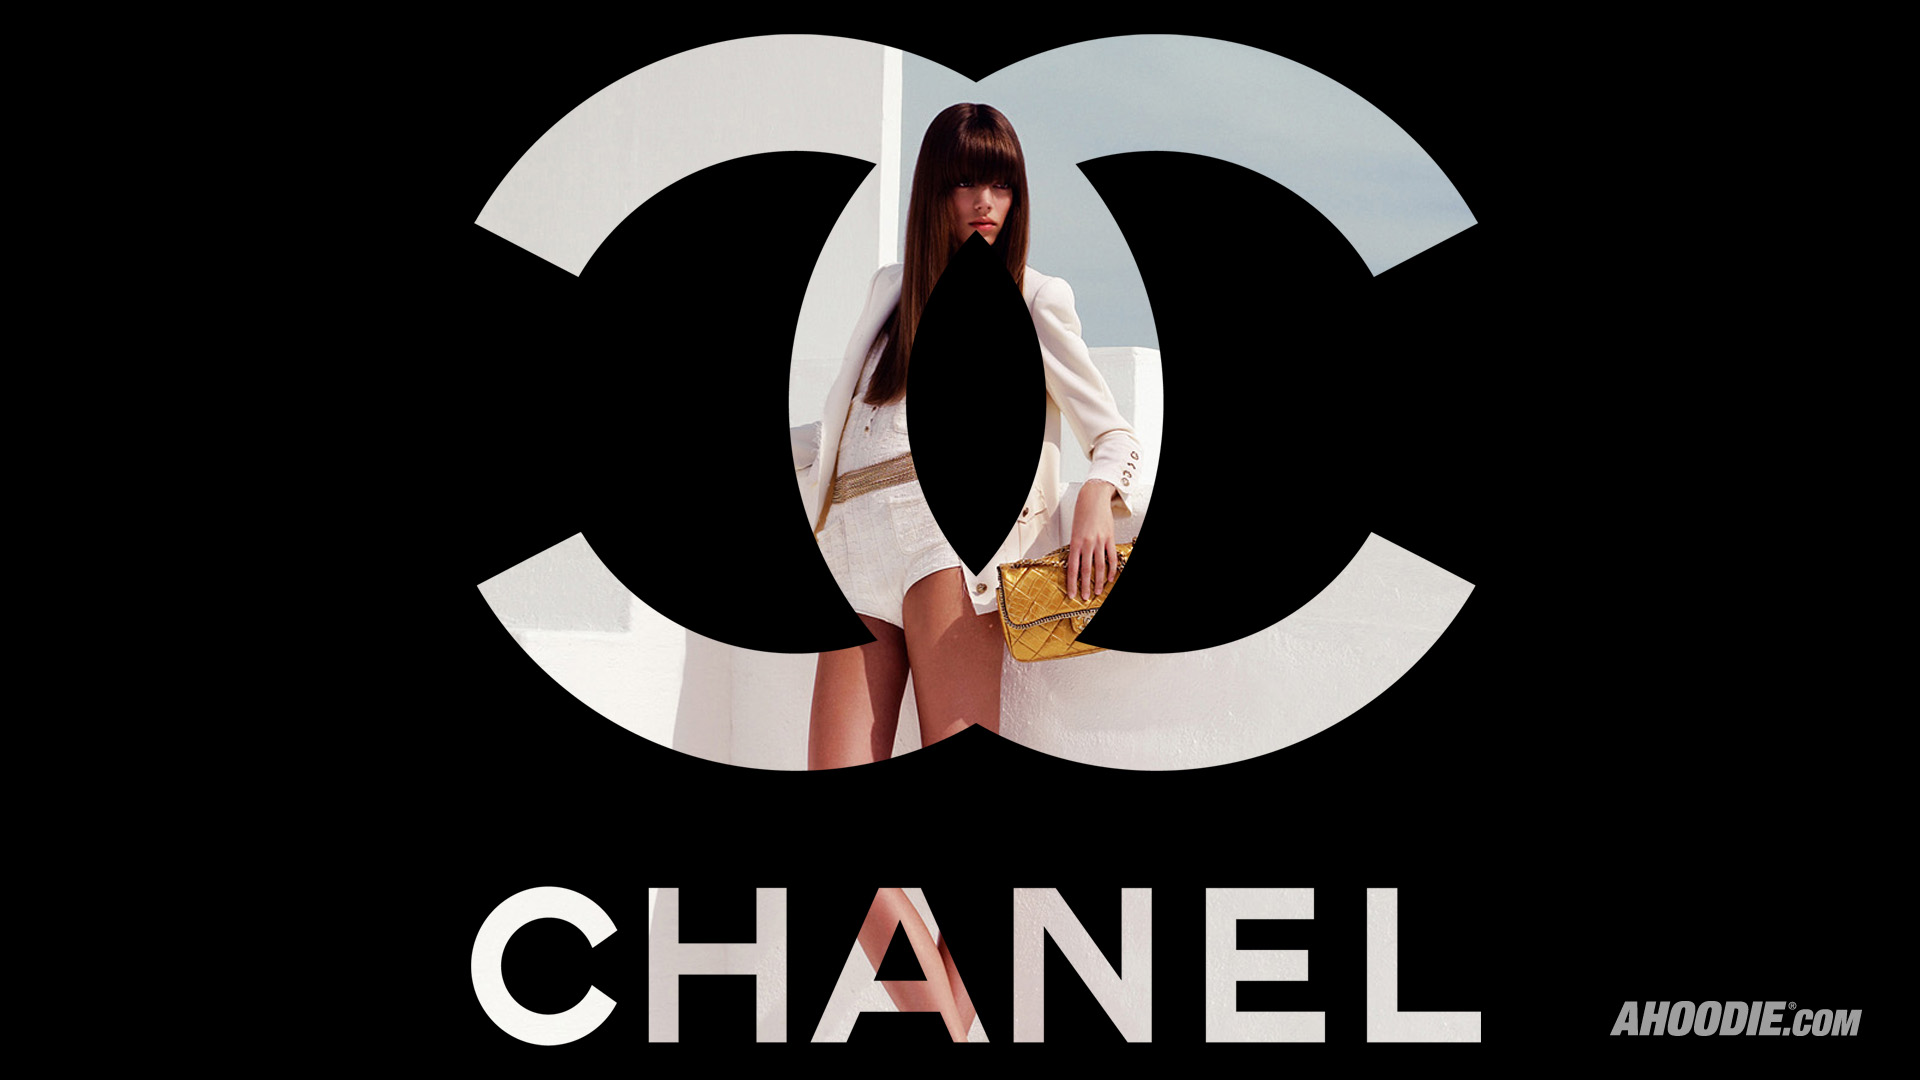 46 Chanel Wallpapers Hd On Wallpapersafari